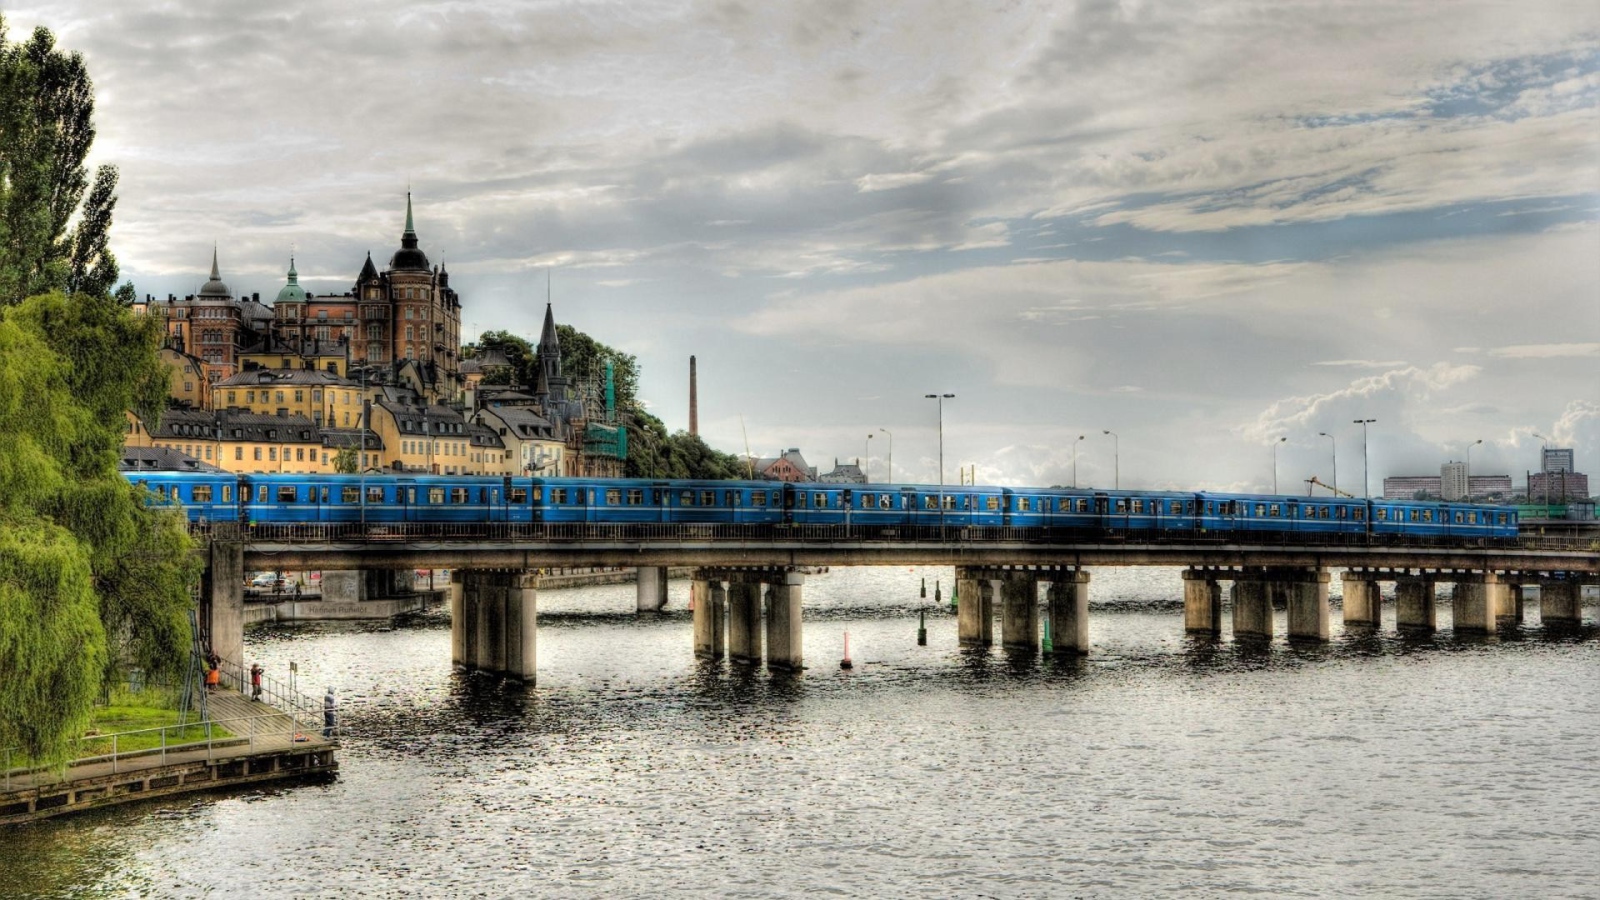 The train crosses the bridge over the river in Sweden